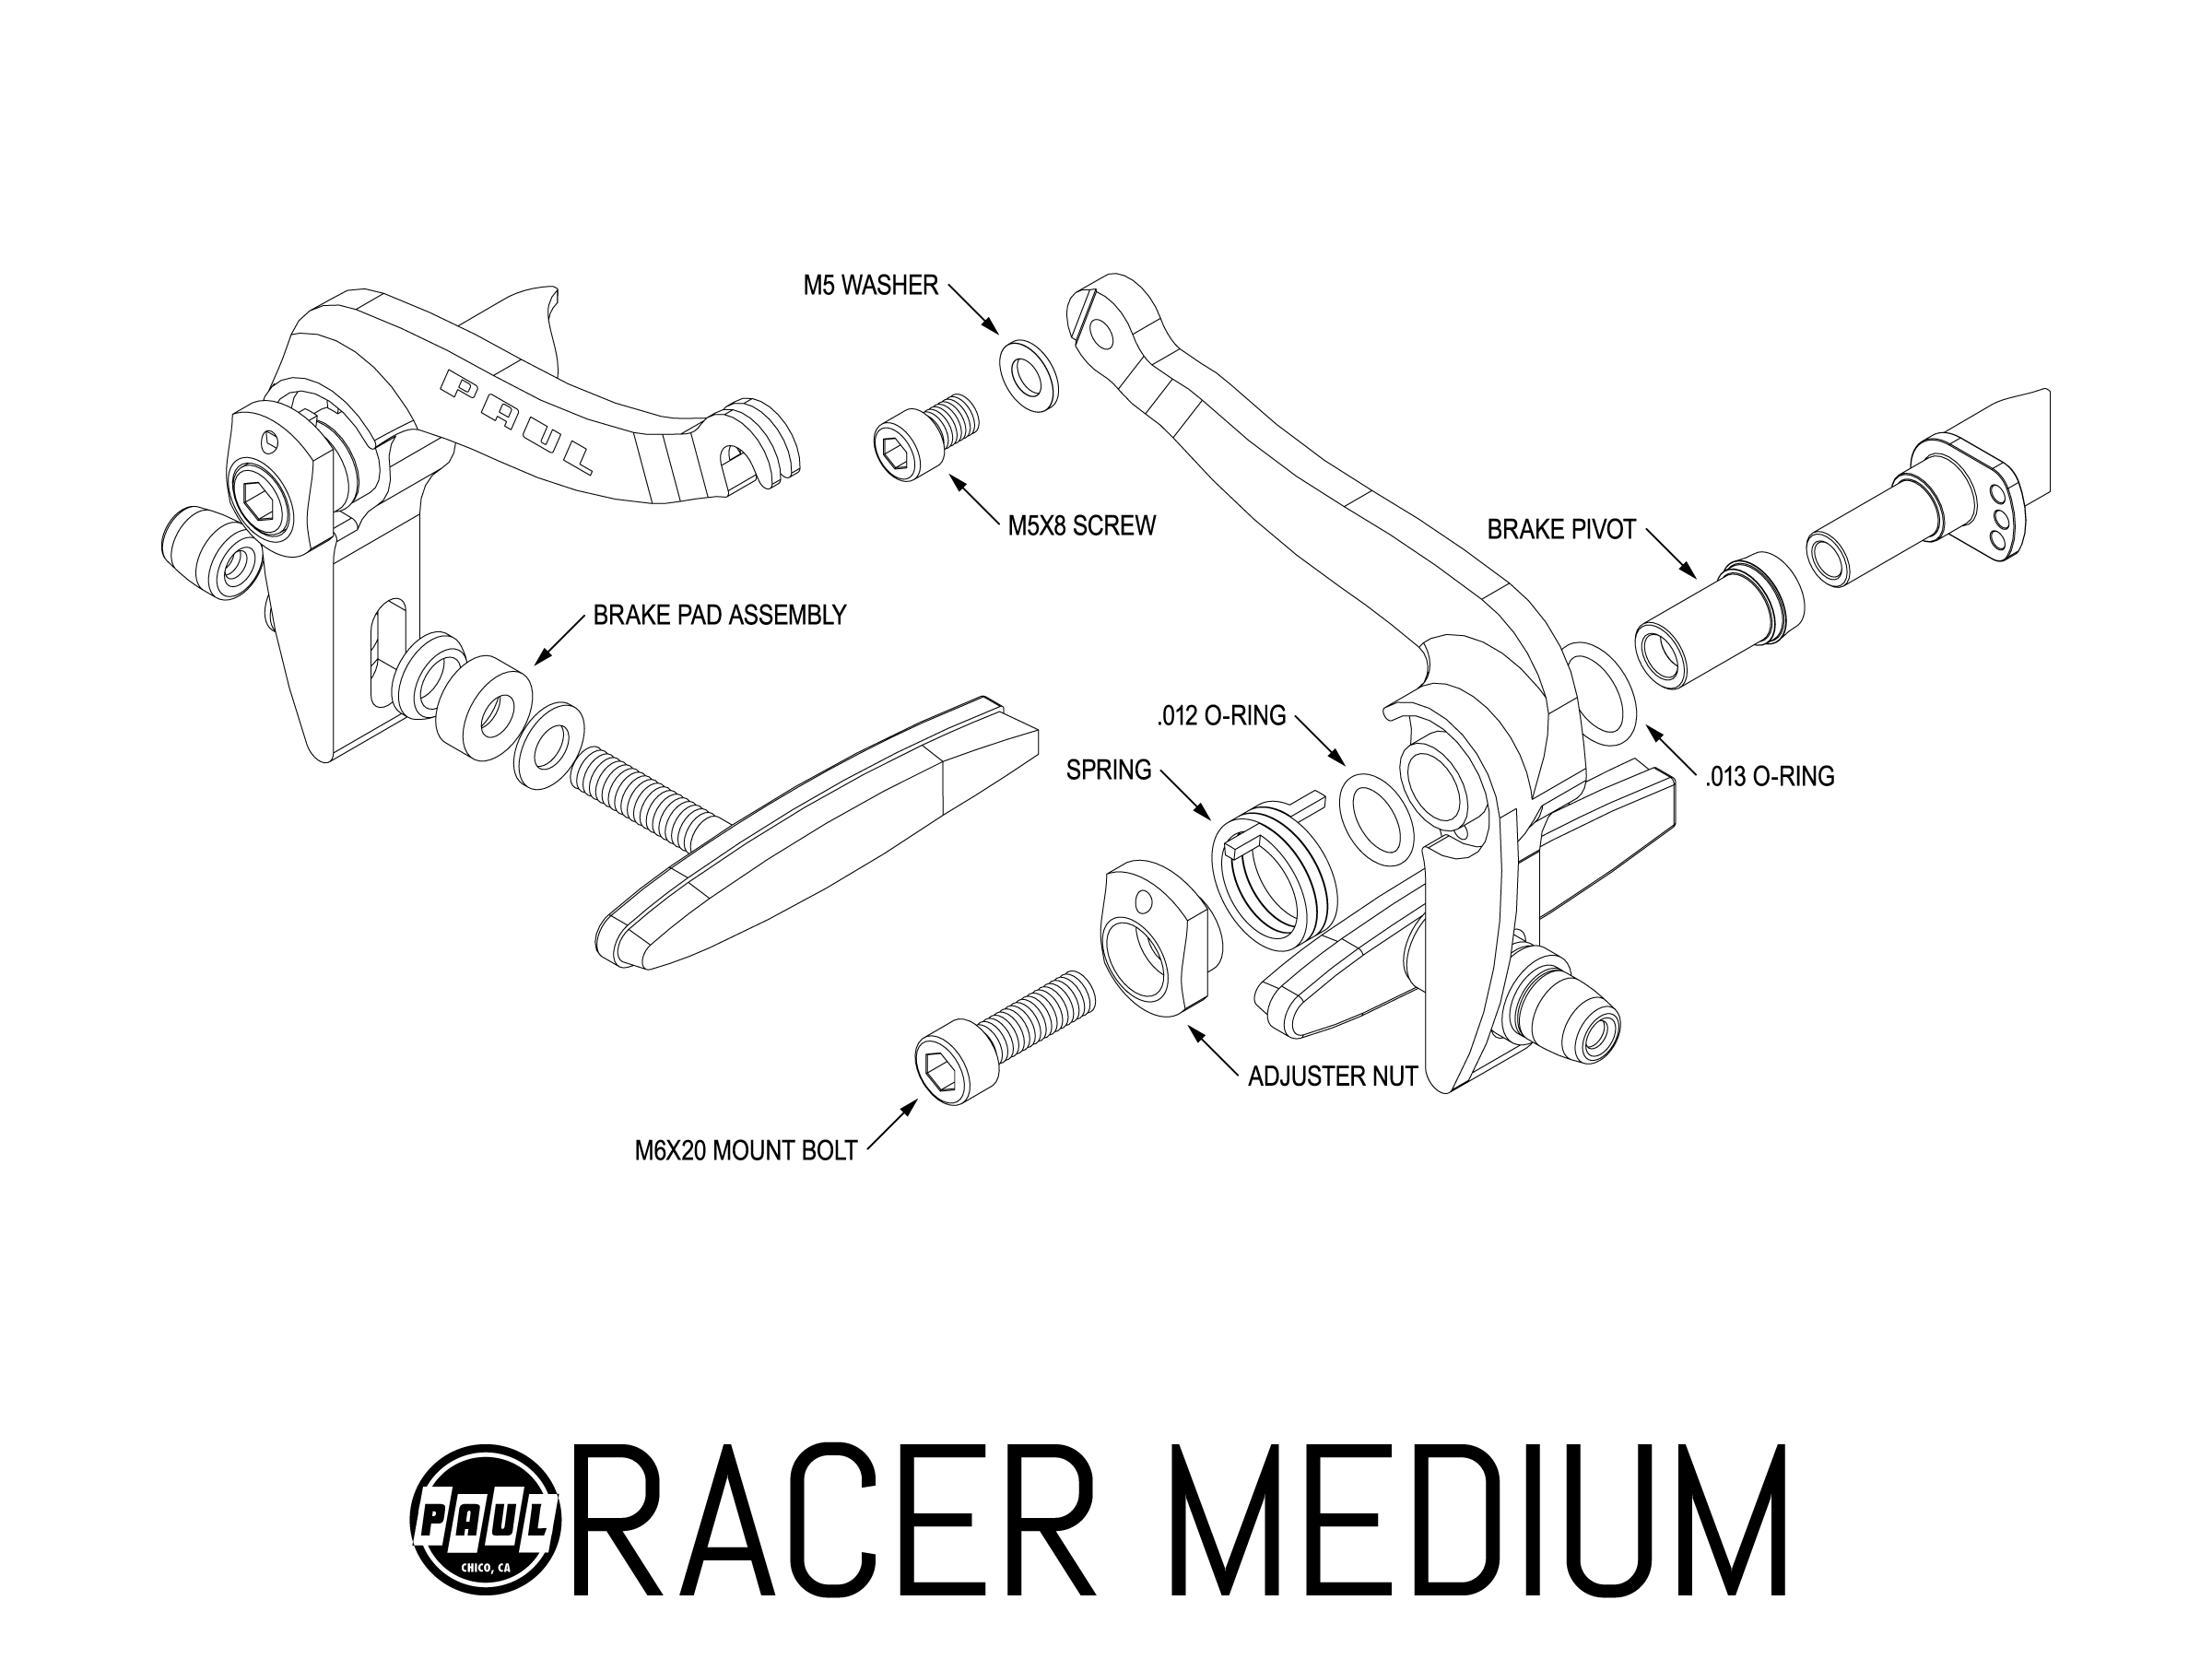 Racer Medium – Paul Component Engineering